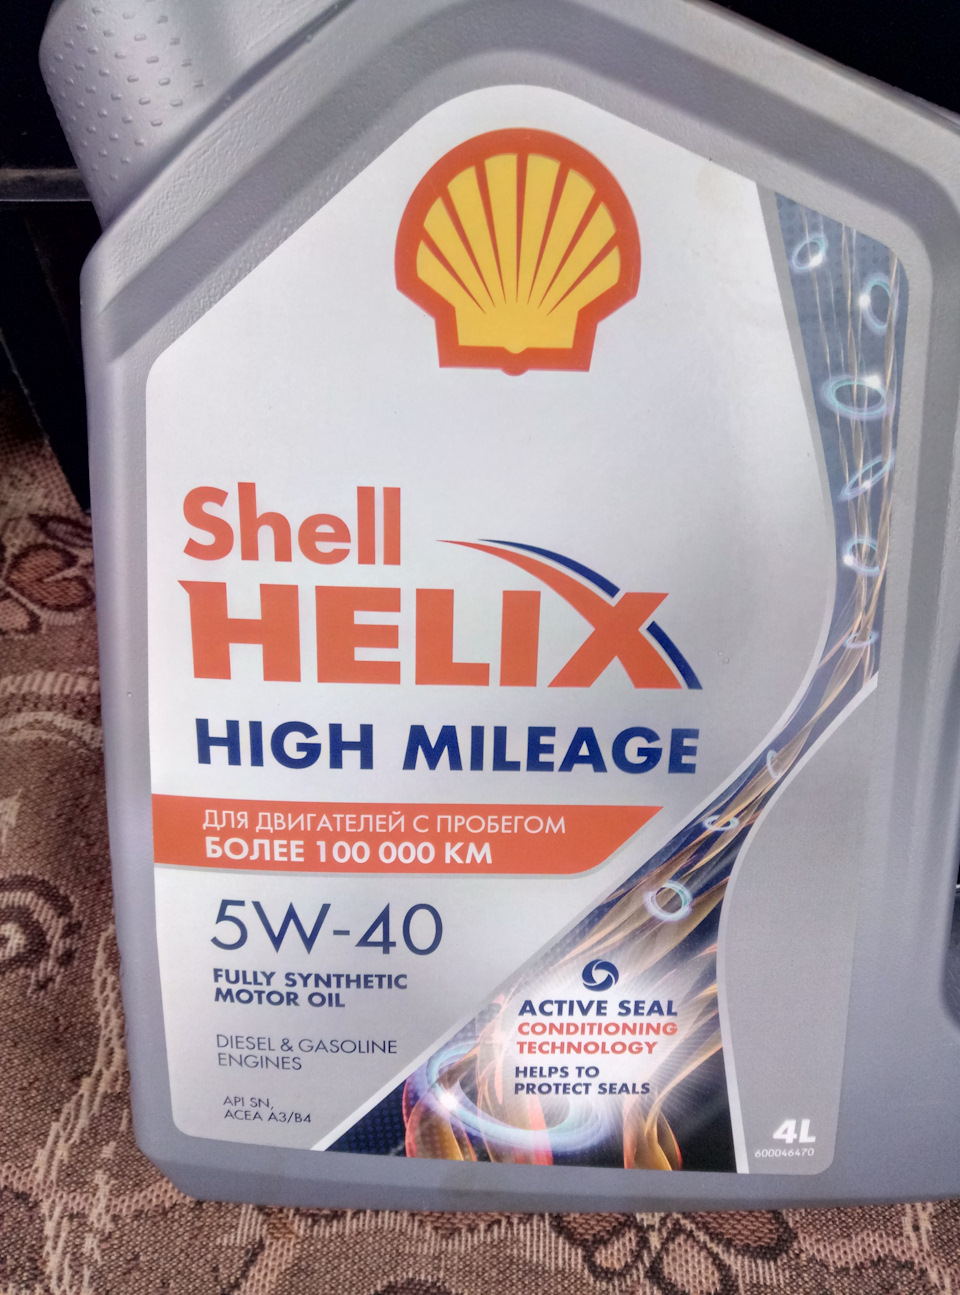 Helix high mileage. Shell Helix High Mileage 5w-40. Shell Helix High Mileage 5w-40 синтетическое 4 л. Масло Шелл Хеликс 5w40 High Mileage допуск. Шелл Хеликс для двигателей с пробегом более 100000.